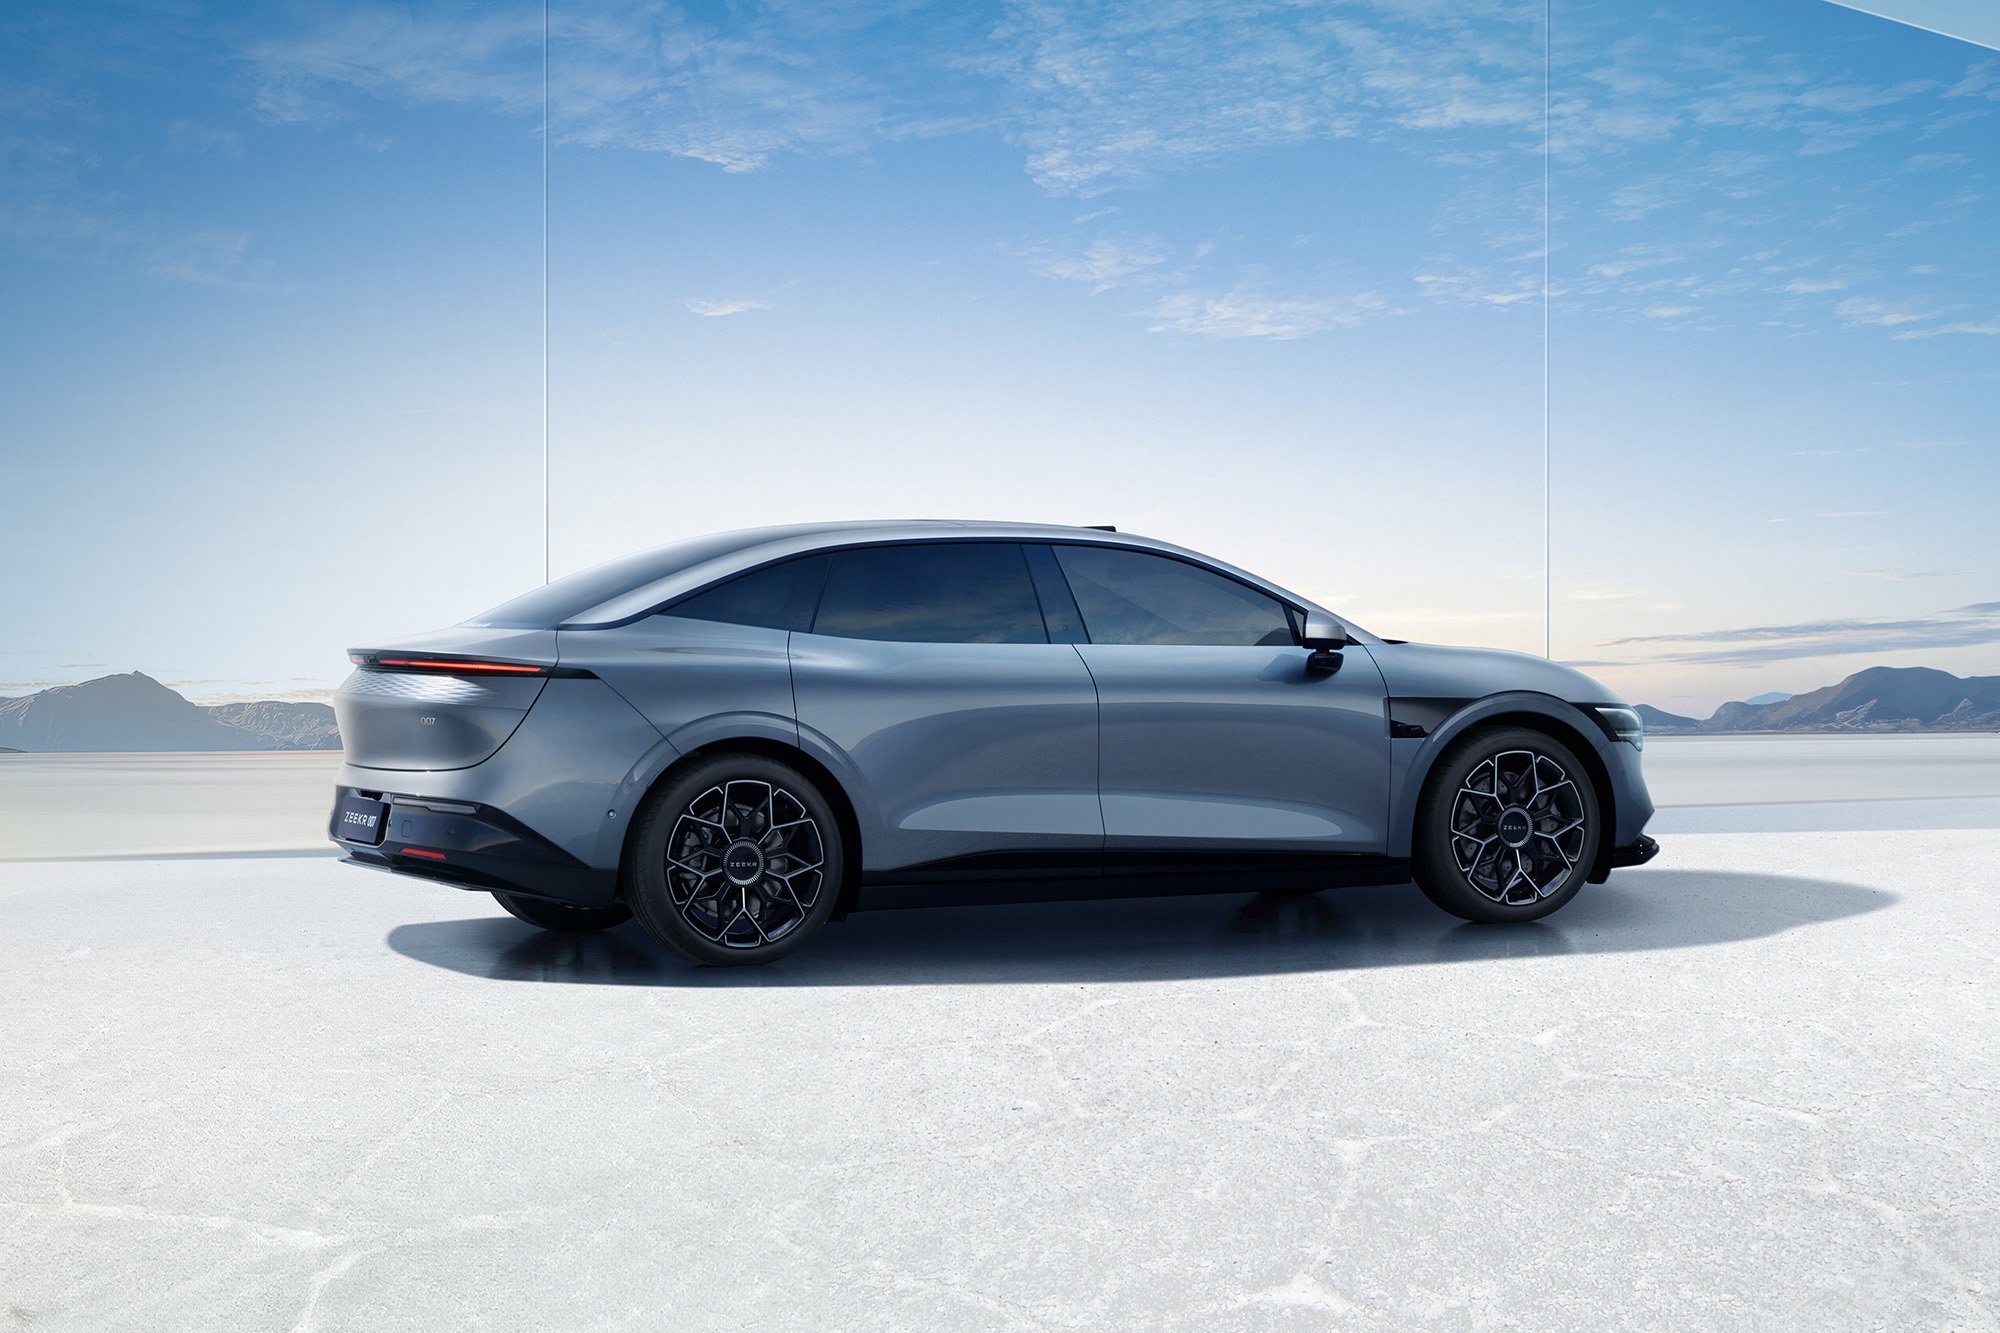 The exterior design of the new design language "Hidden Energy" of the all-electric ZEEKR 007 sedan